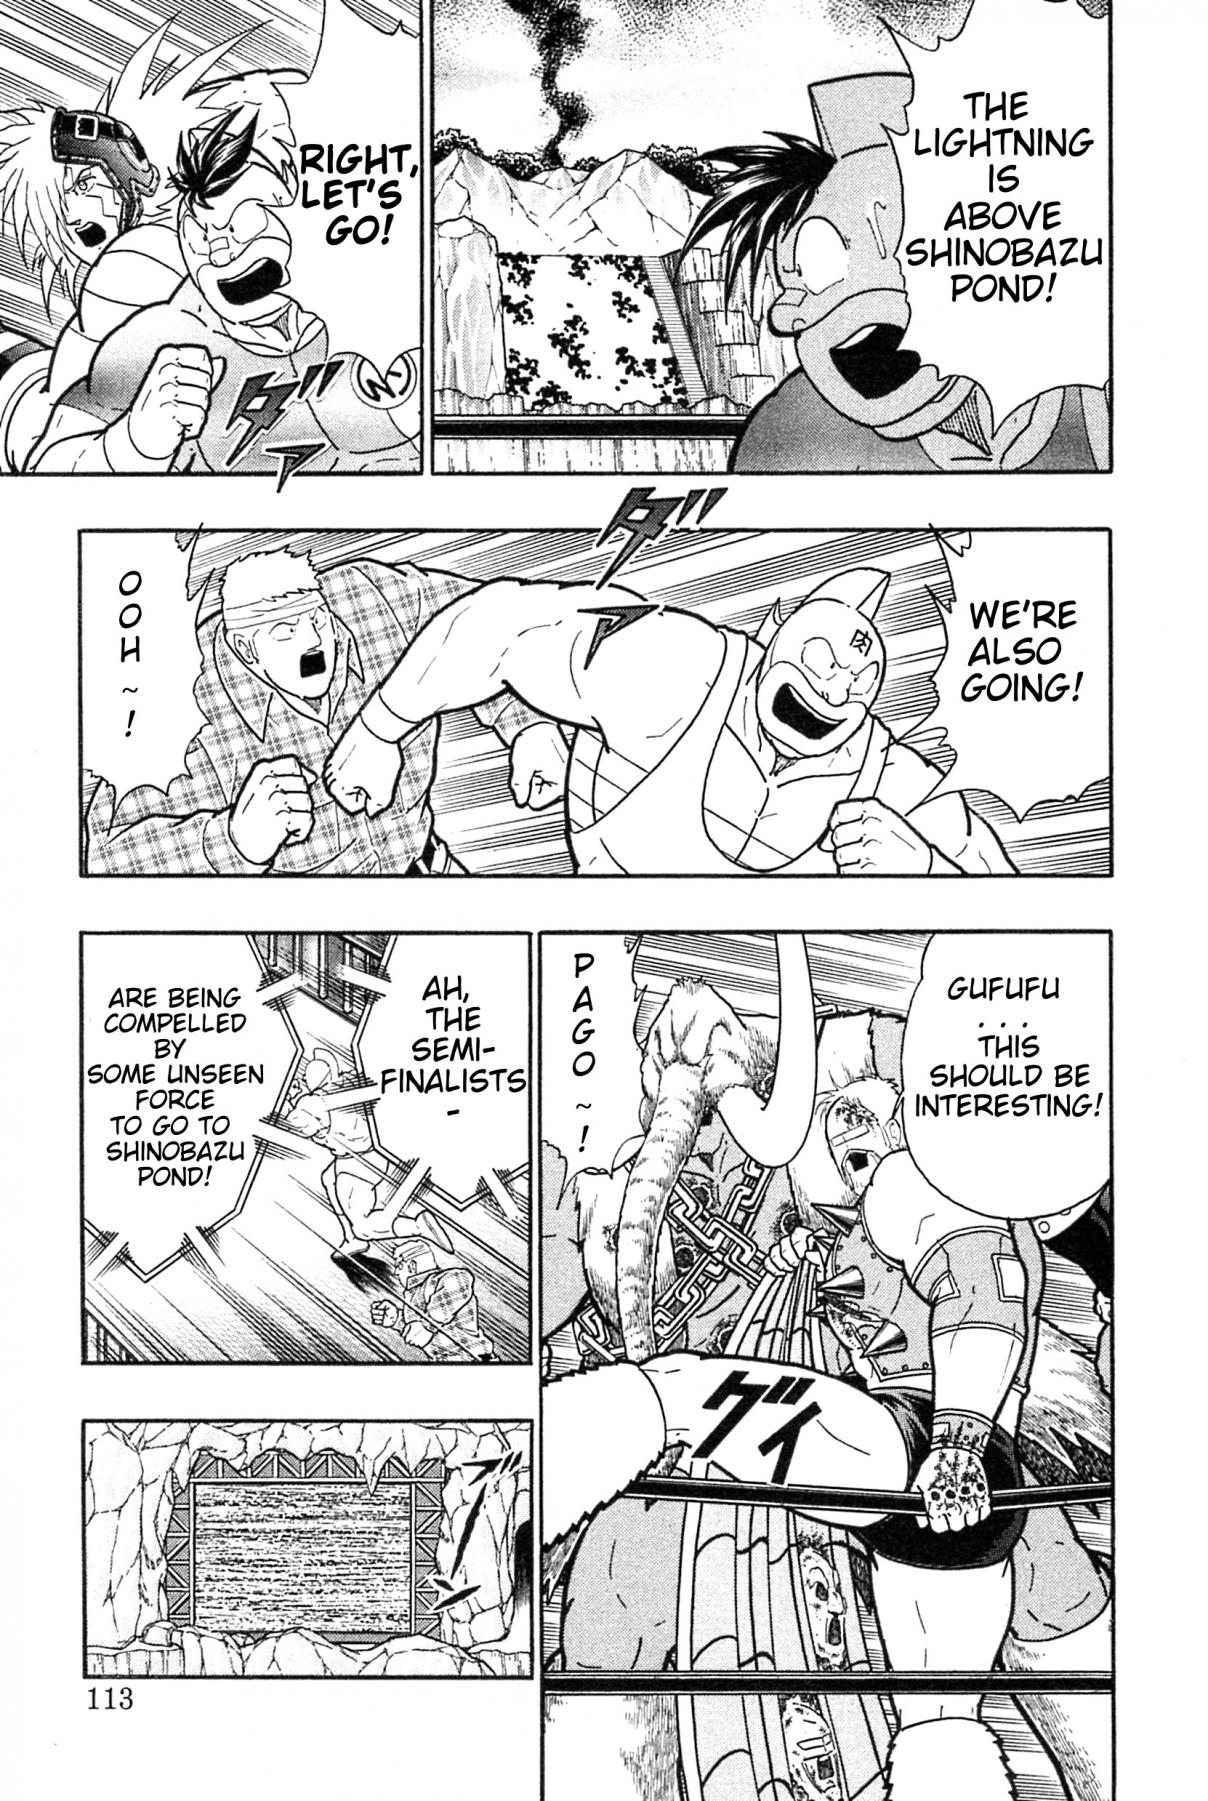 Kinnikuman Nisei: Ultimate Chojin Tag Vol. 17 Ch. 183 The Big Incident at Shinobazu Pond!